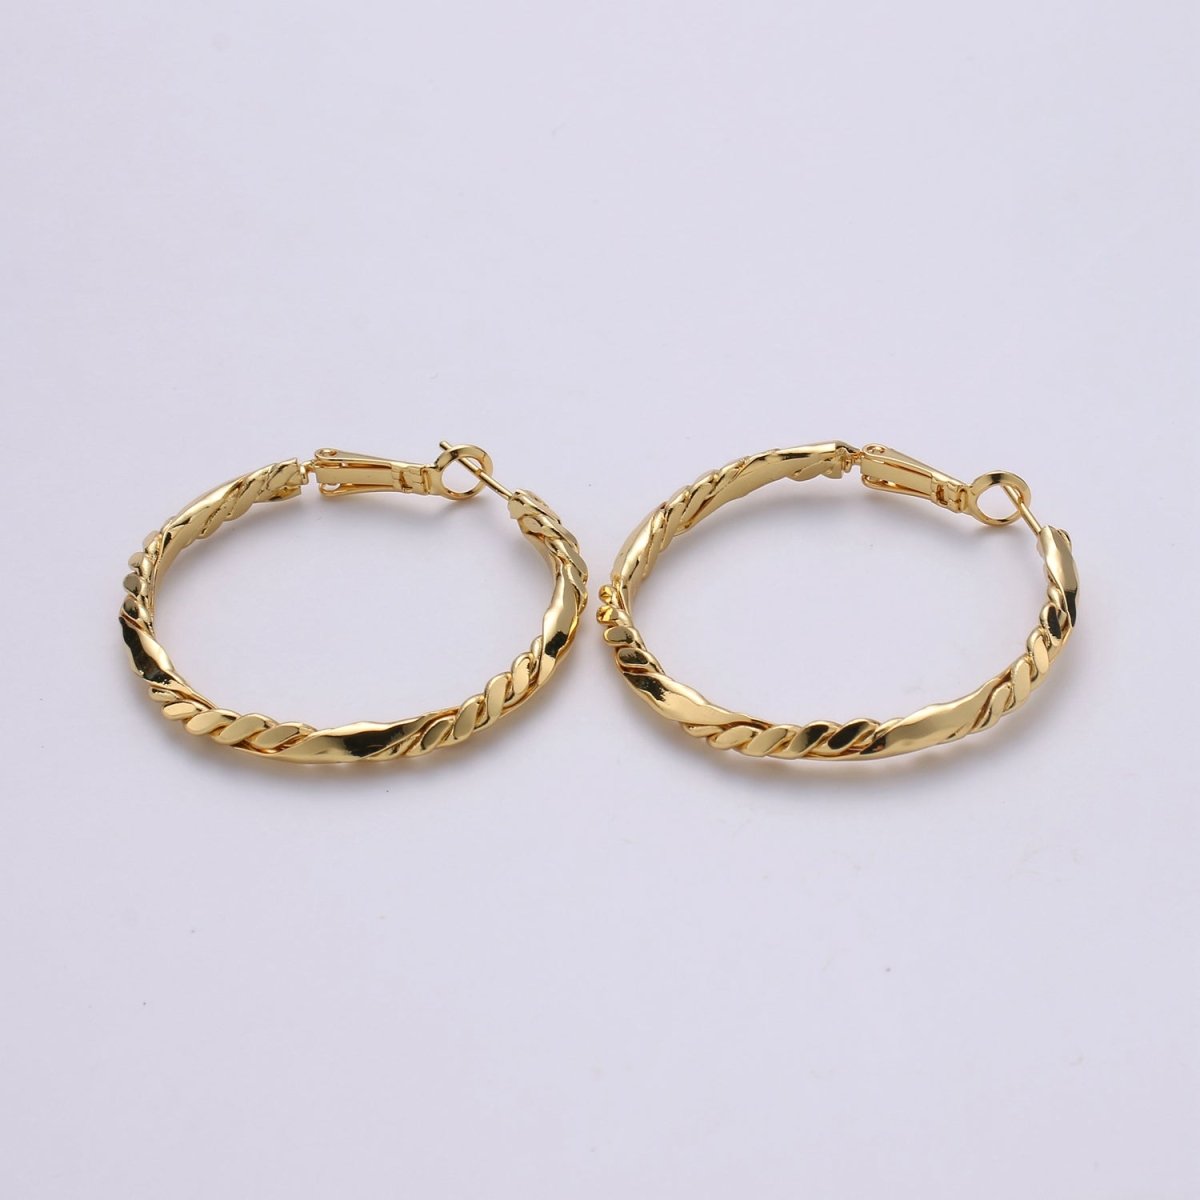 24k Vermeil Gold Earrings, Hoop Earrings, Medium Hoop, Half Twisted Rope Earring, Gift for Her, Earrings for Women, Everyday Wear Earring Q-527 - DLUXCA